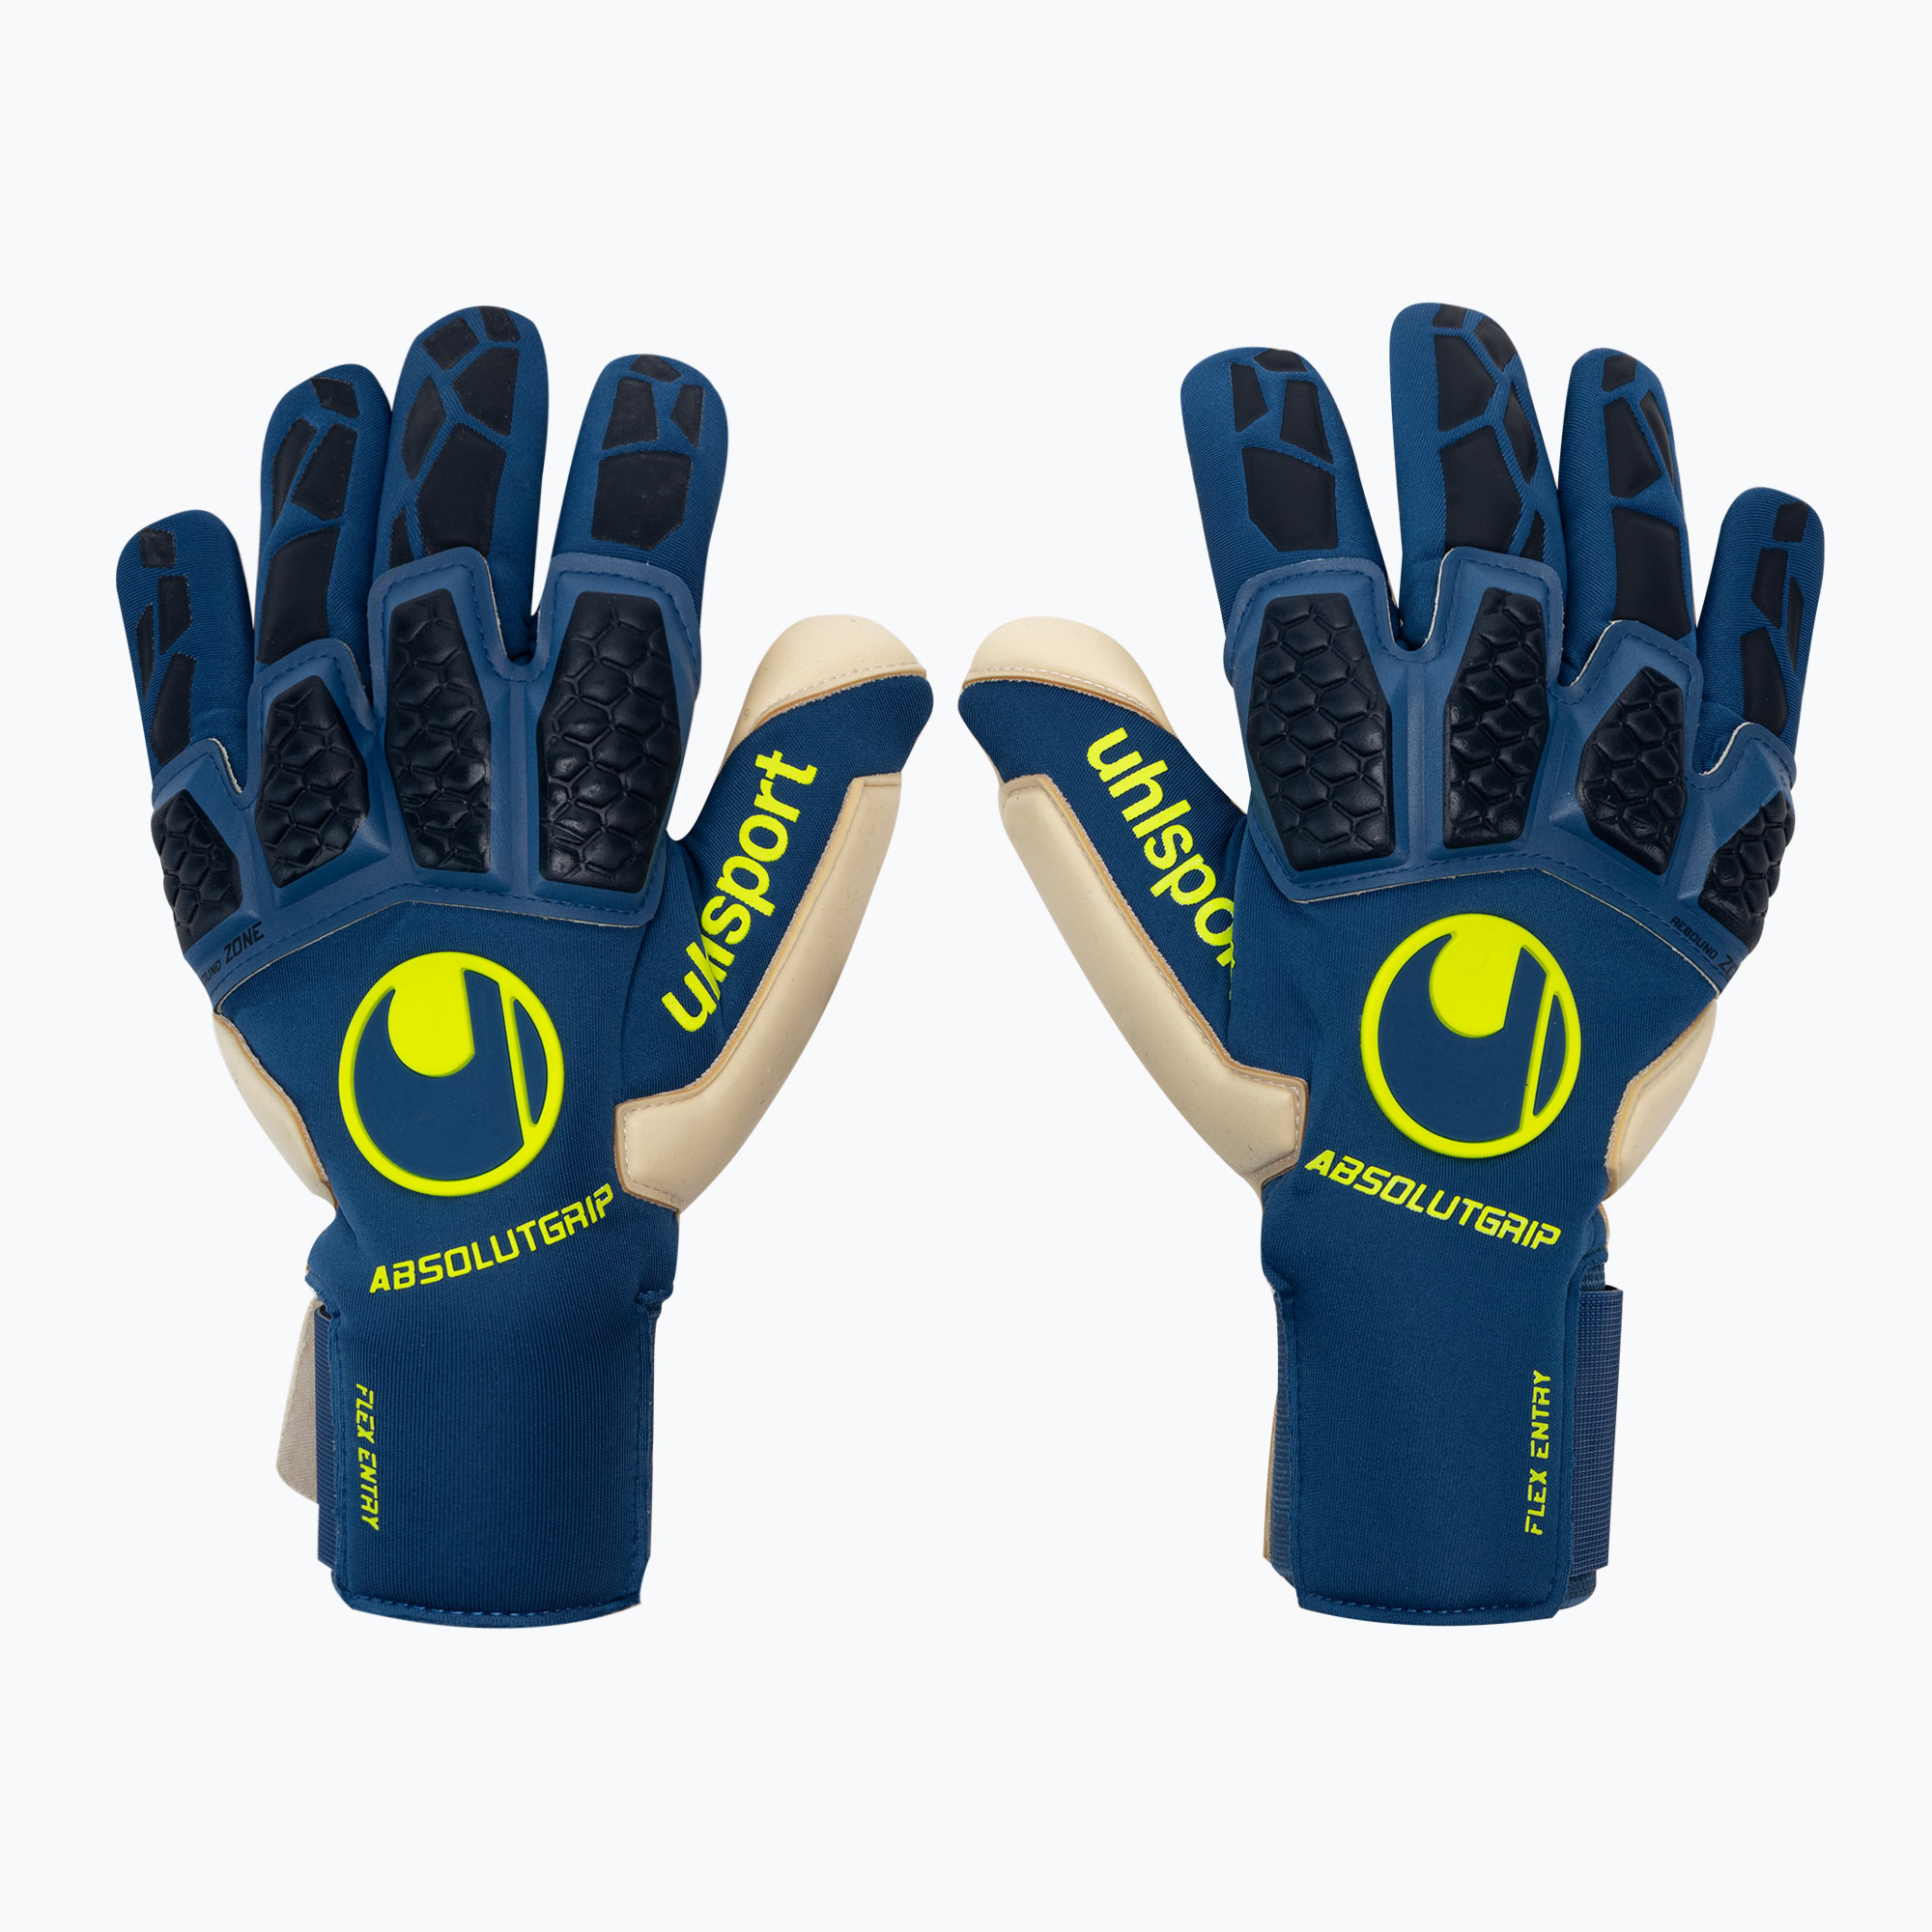 Uhlsport Hyperact Absolutgrip Reflex сини и бели вратарски ръкавици 101123301